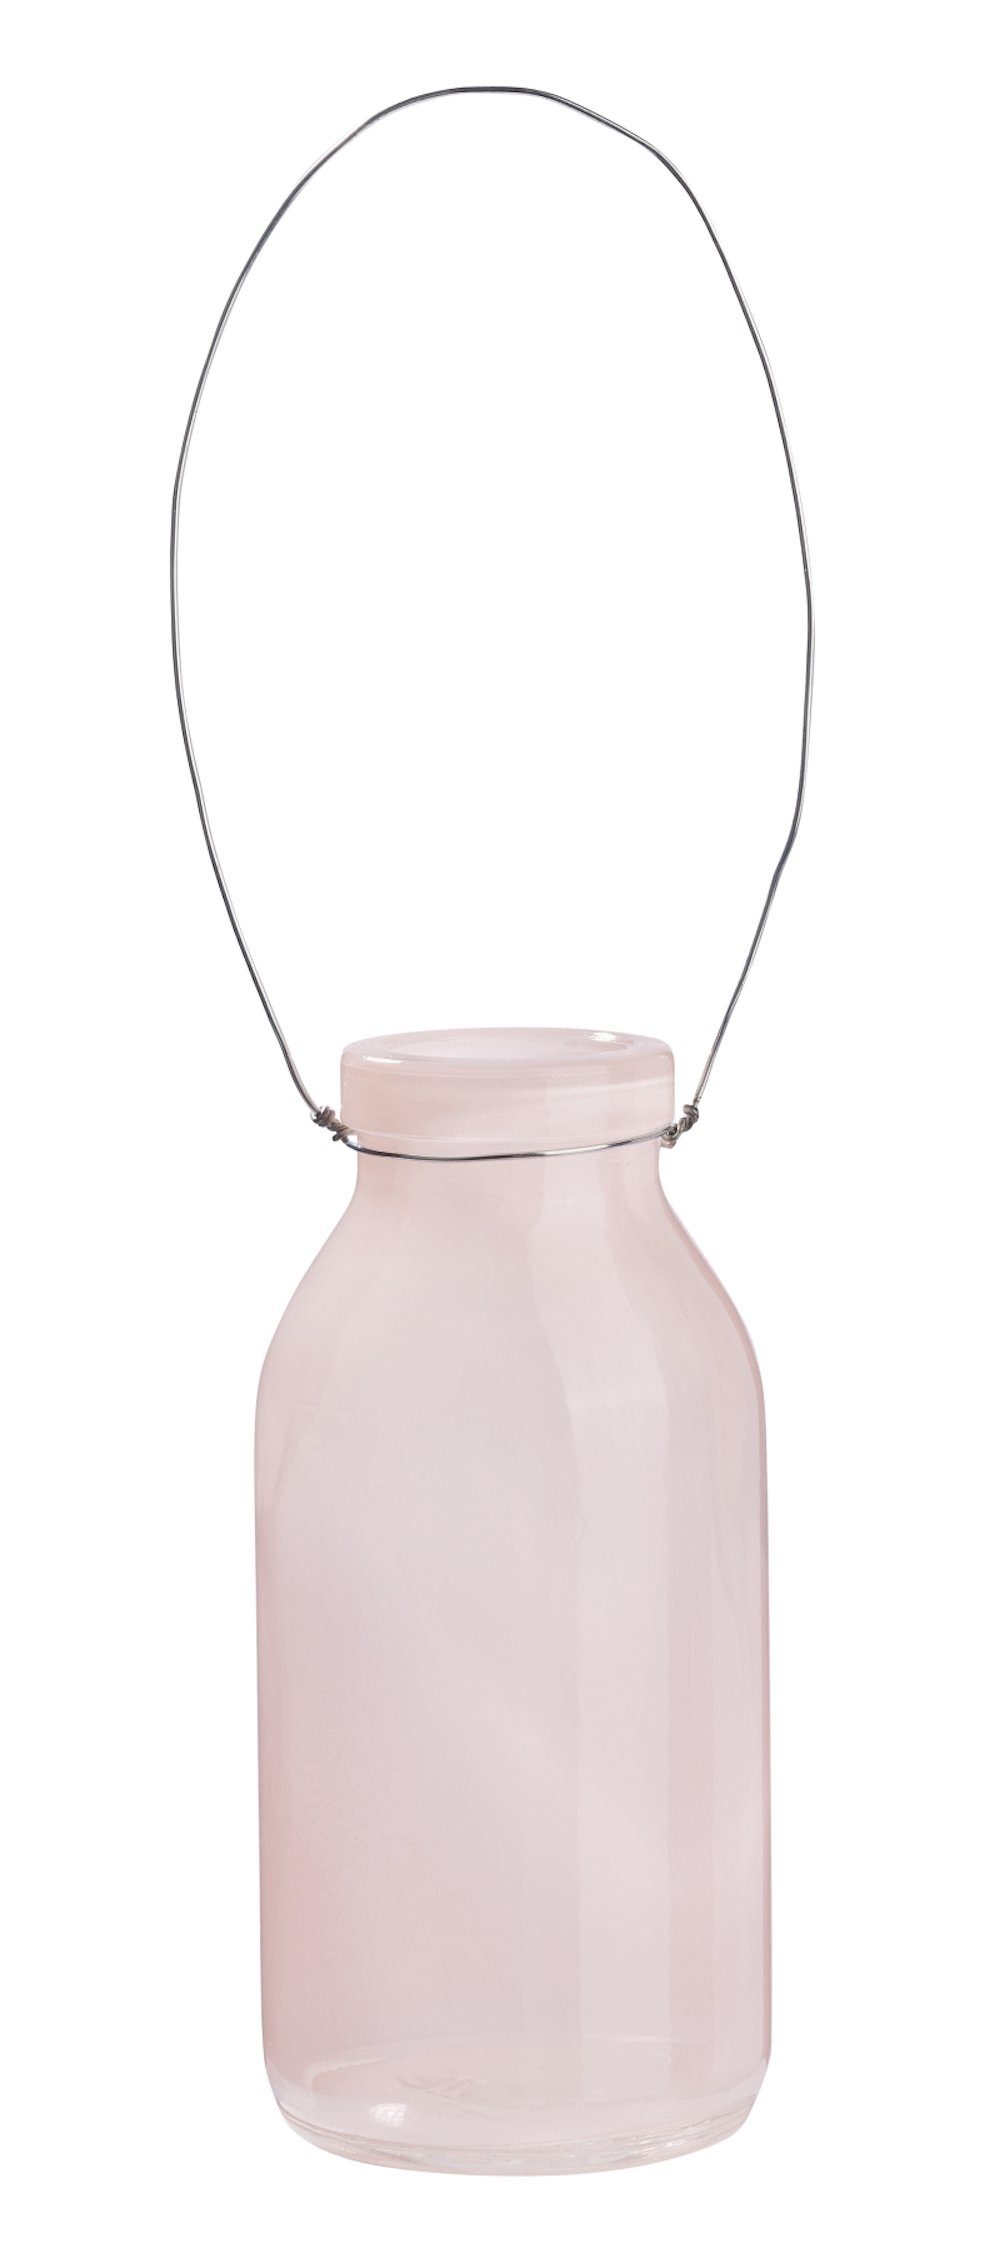 HobbyFun Deko-Glas Deko-Flasche mit Drahtbügel 10,5x4,8x3cm Rosenholz